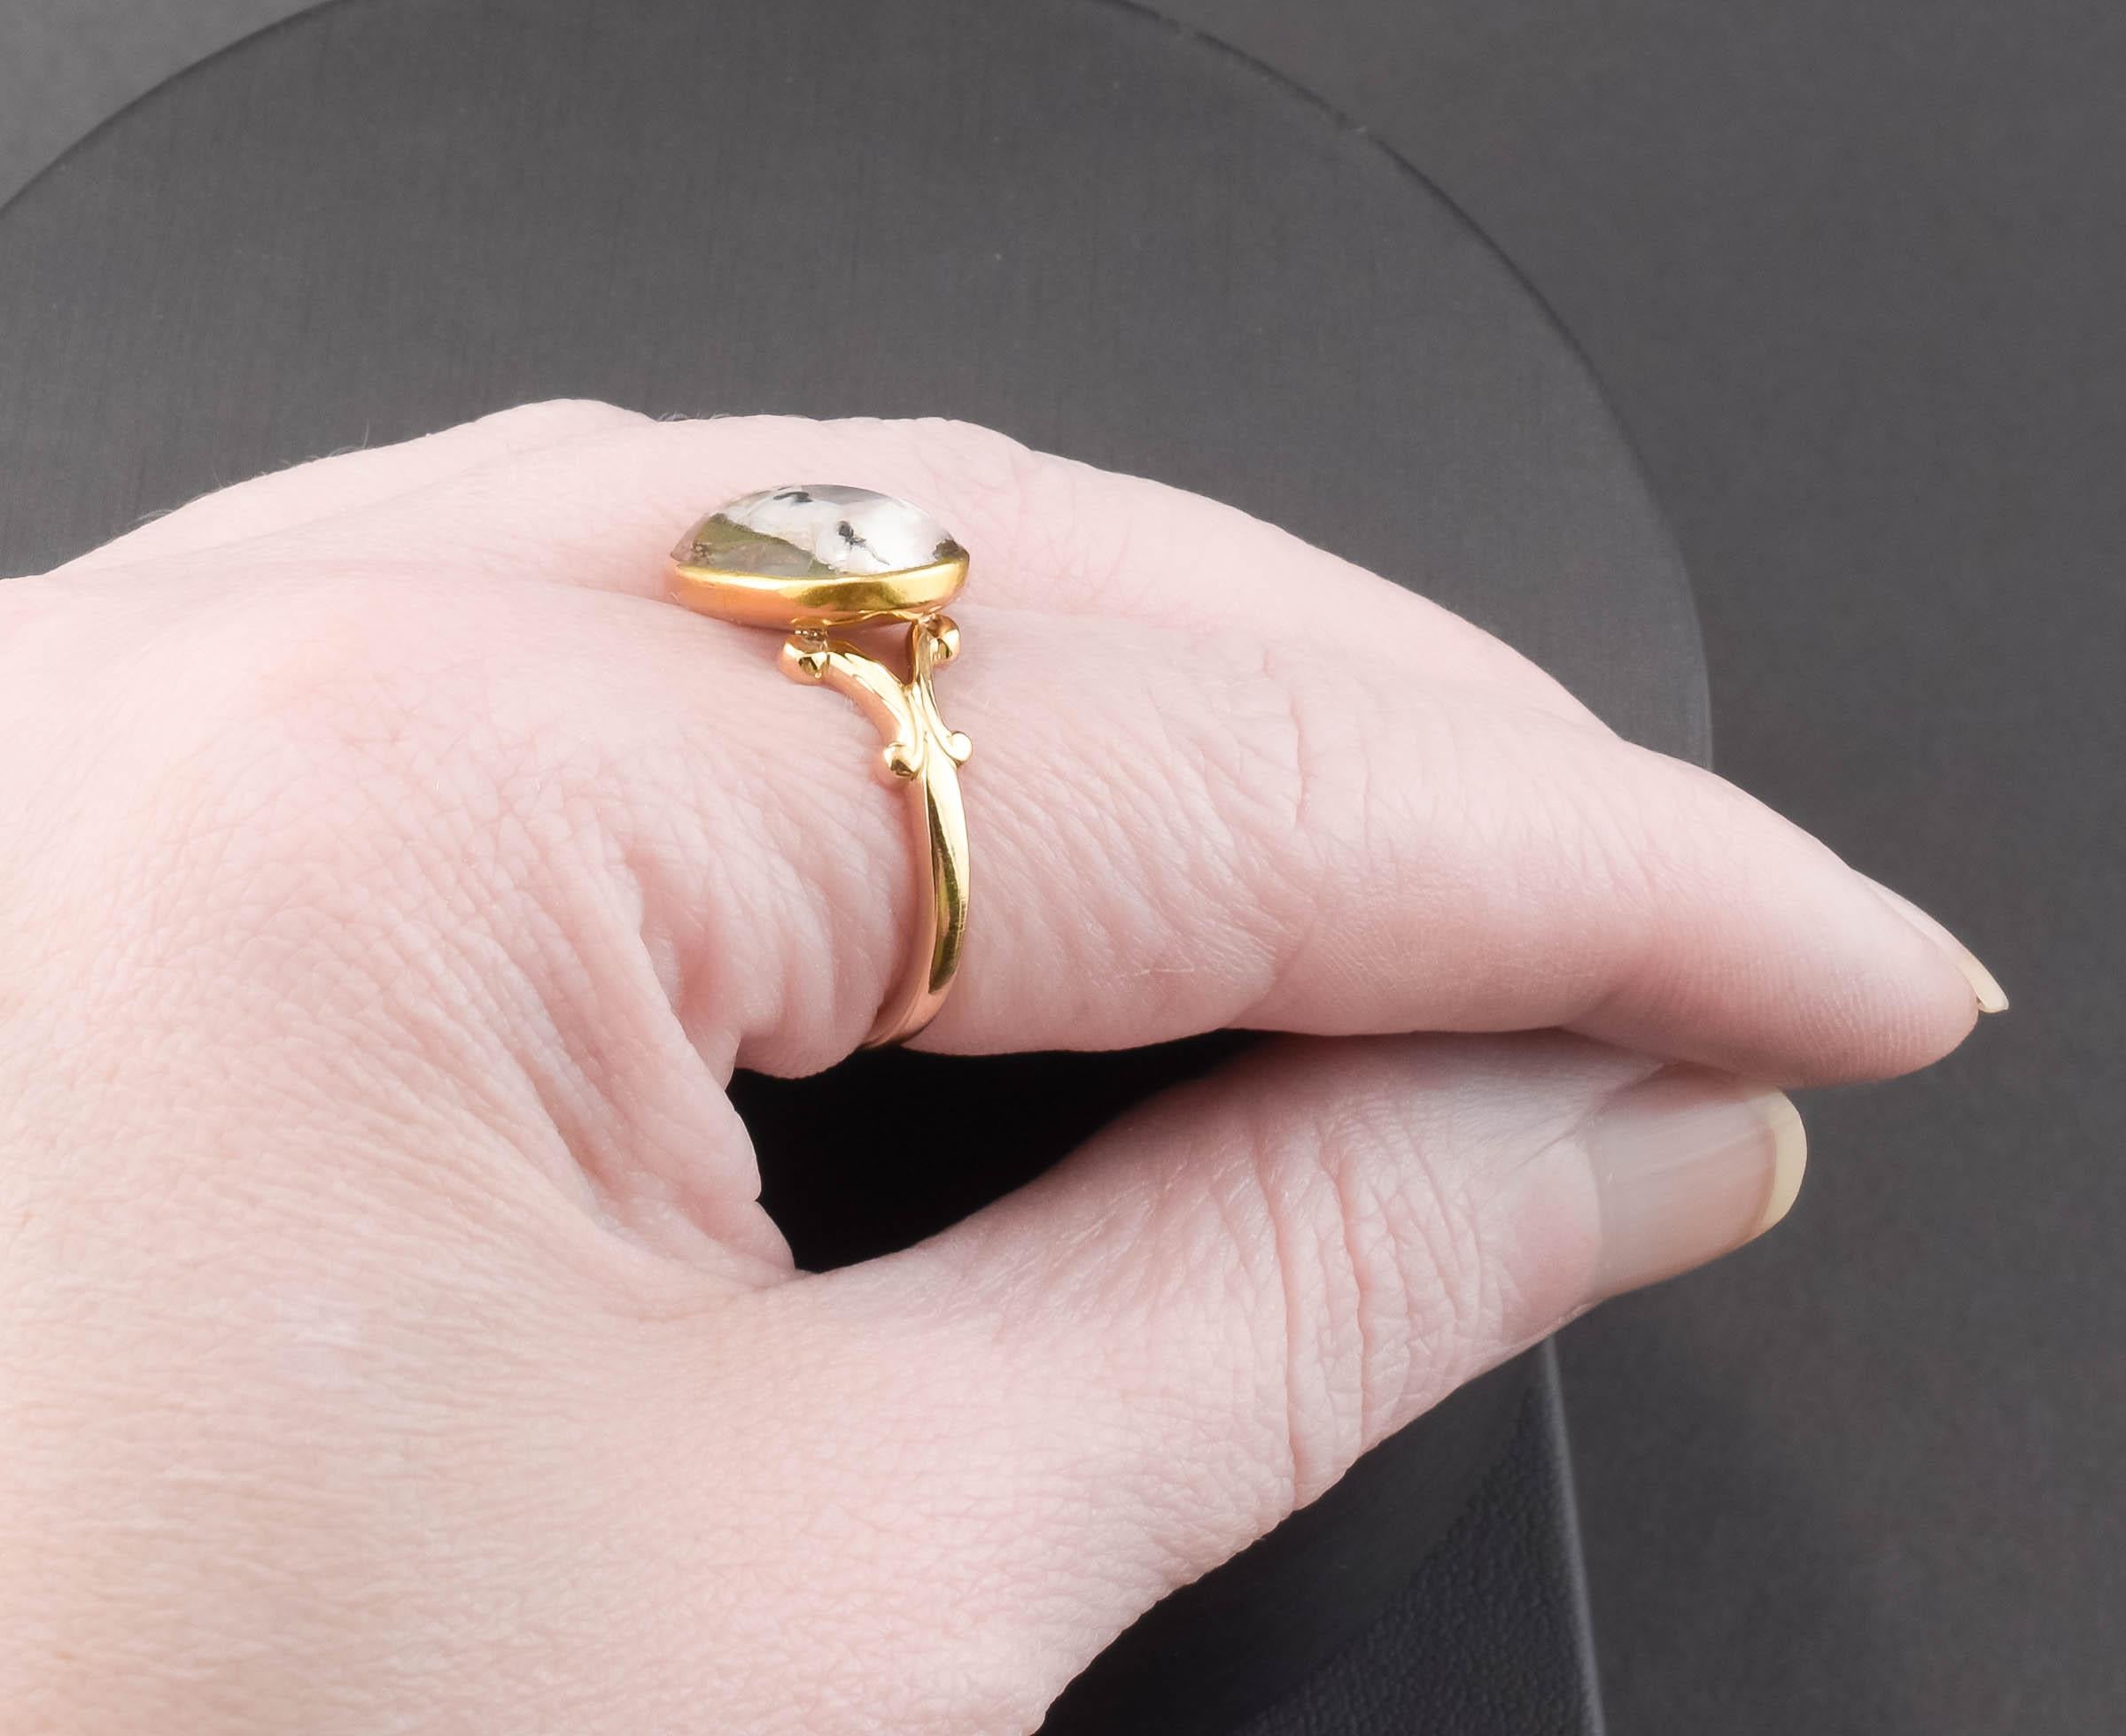 Essex Crystal Running Dog Hound Ring in 18K & 14K Gold - Antique Conversion #2 6